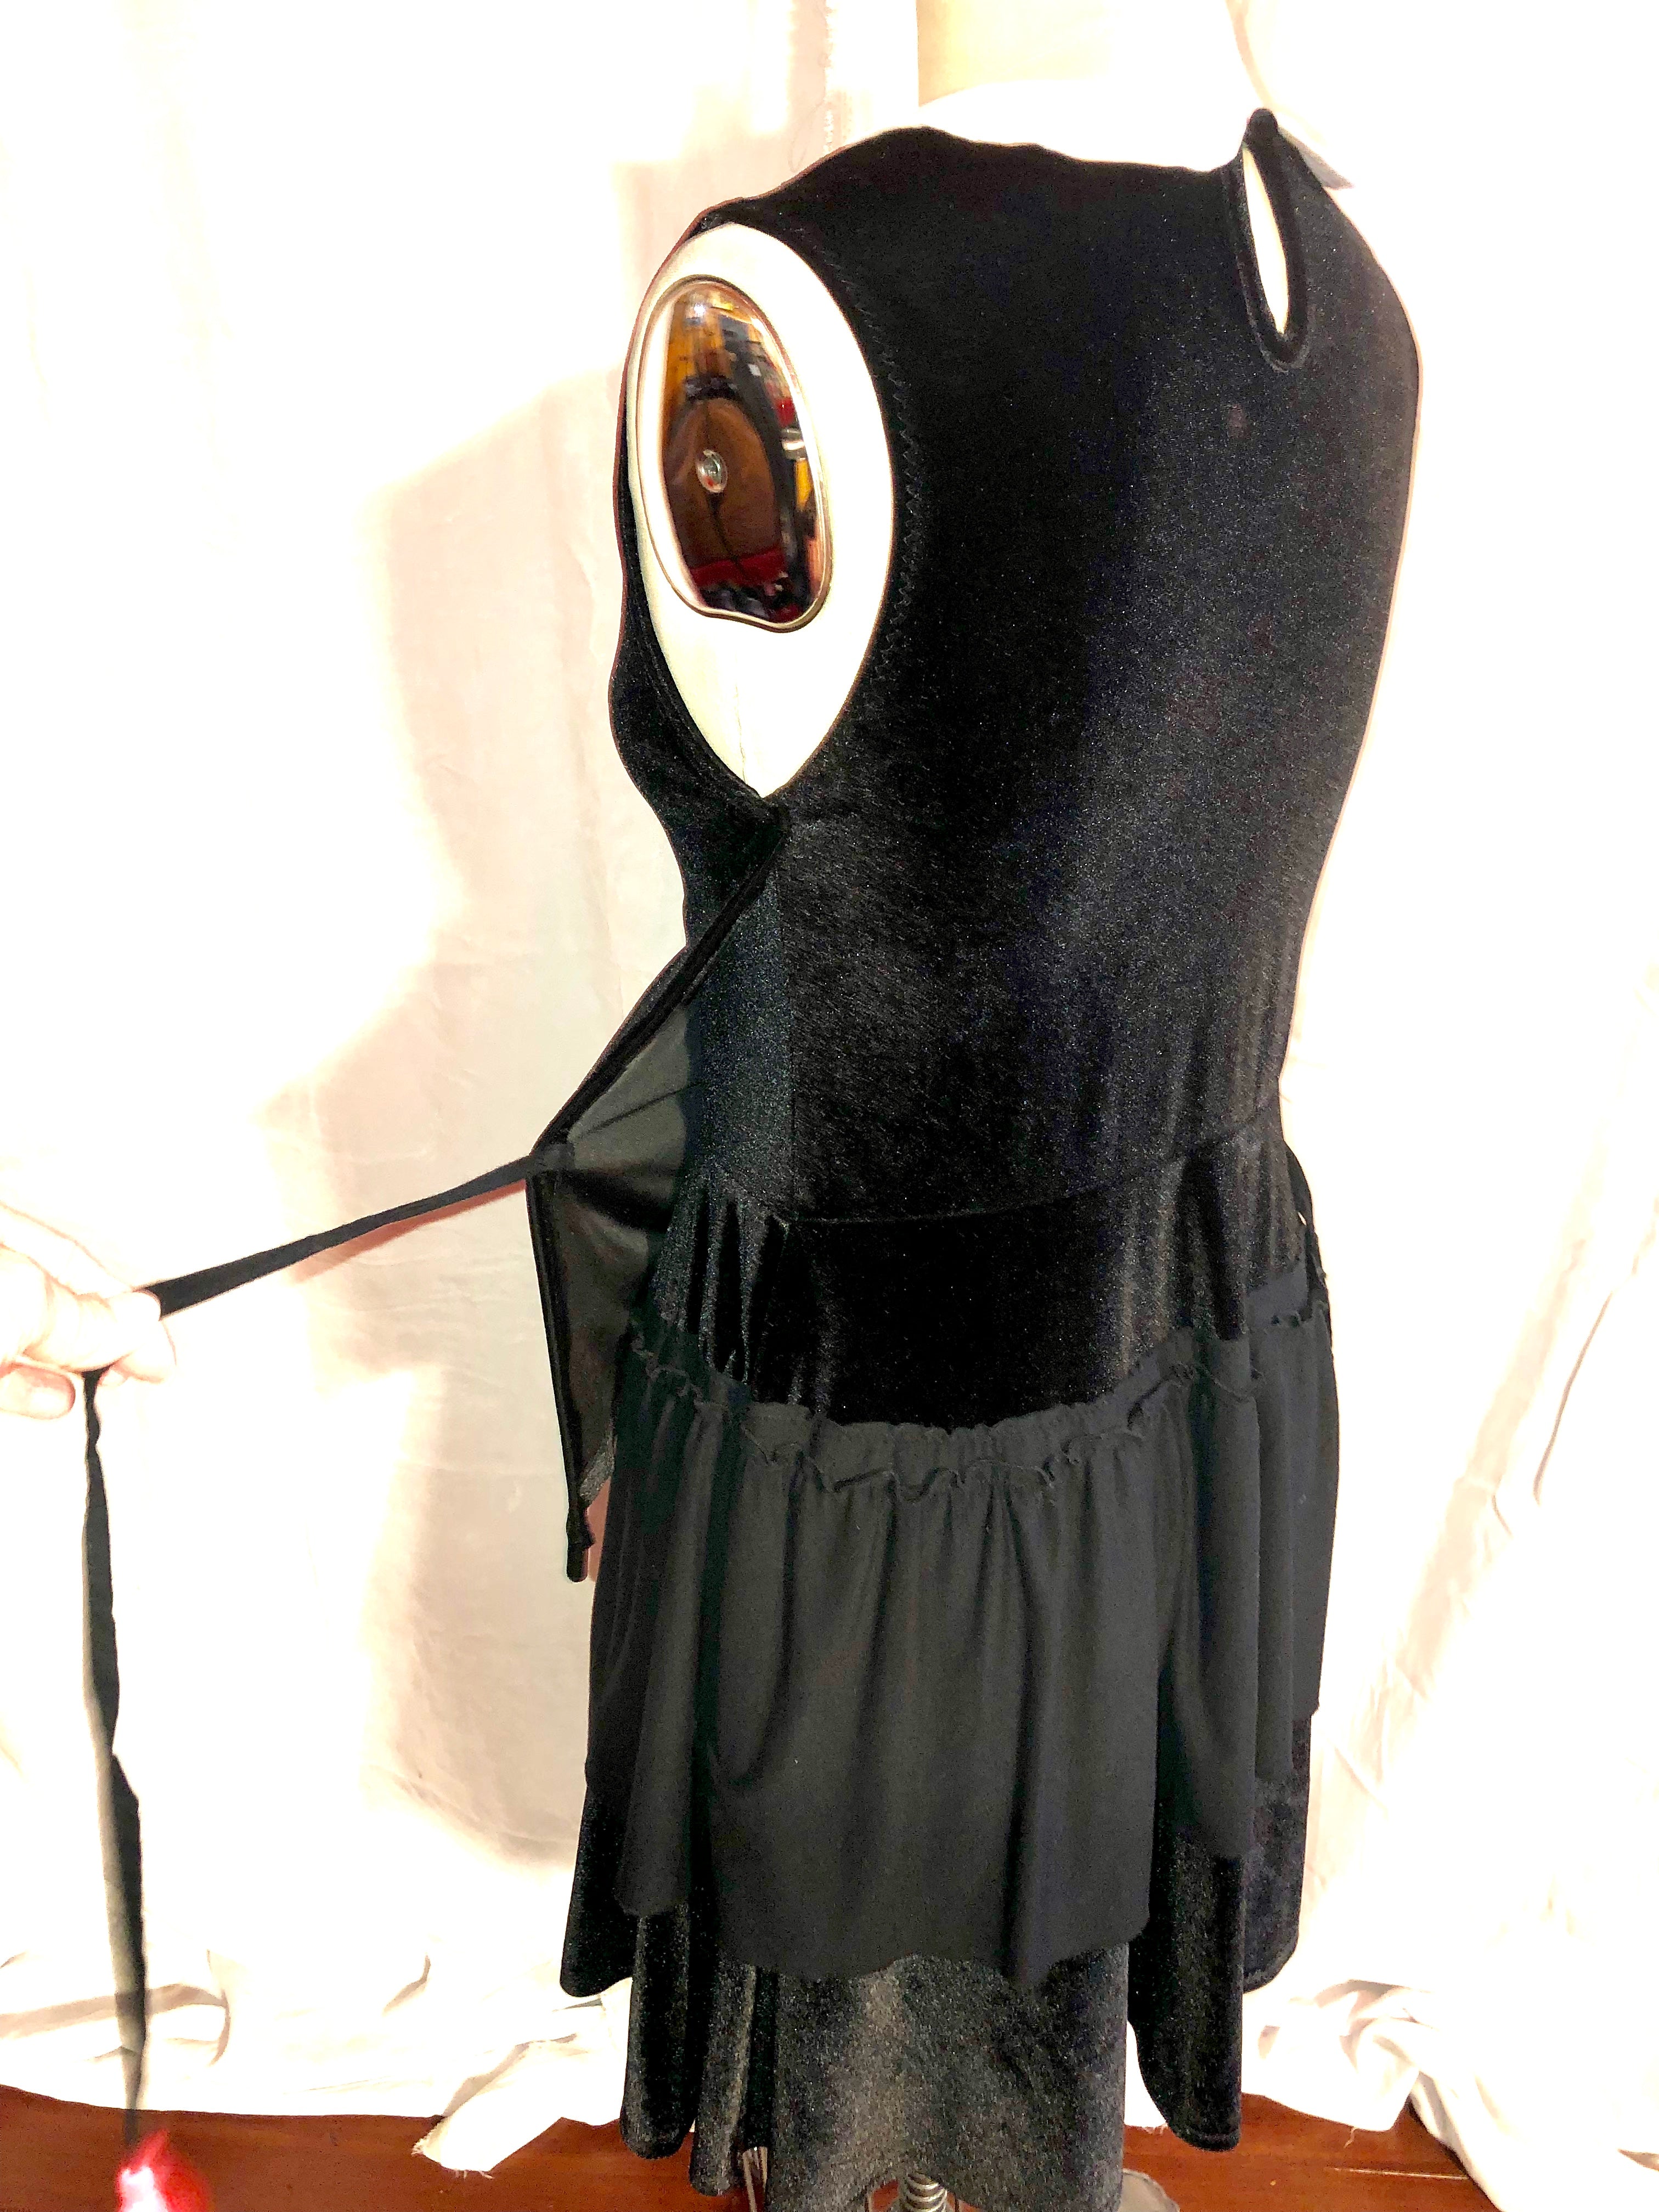 Handmade Black Dress